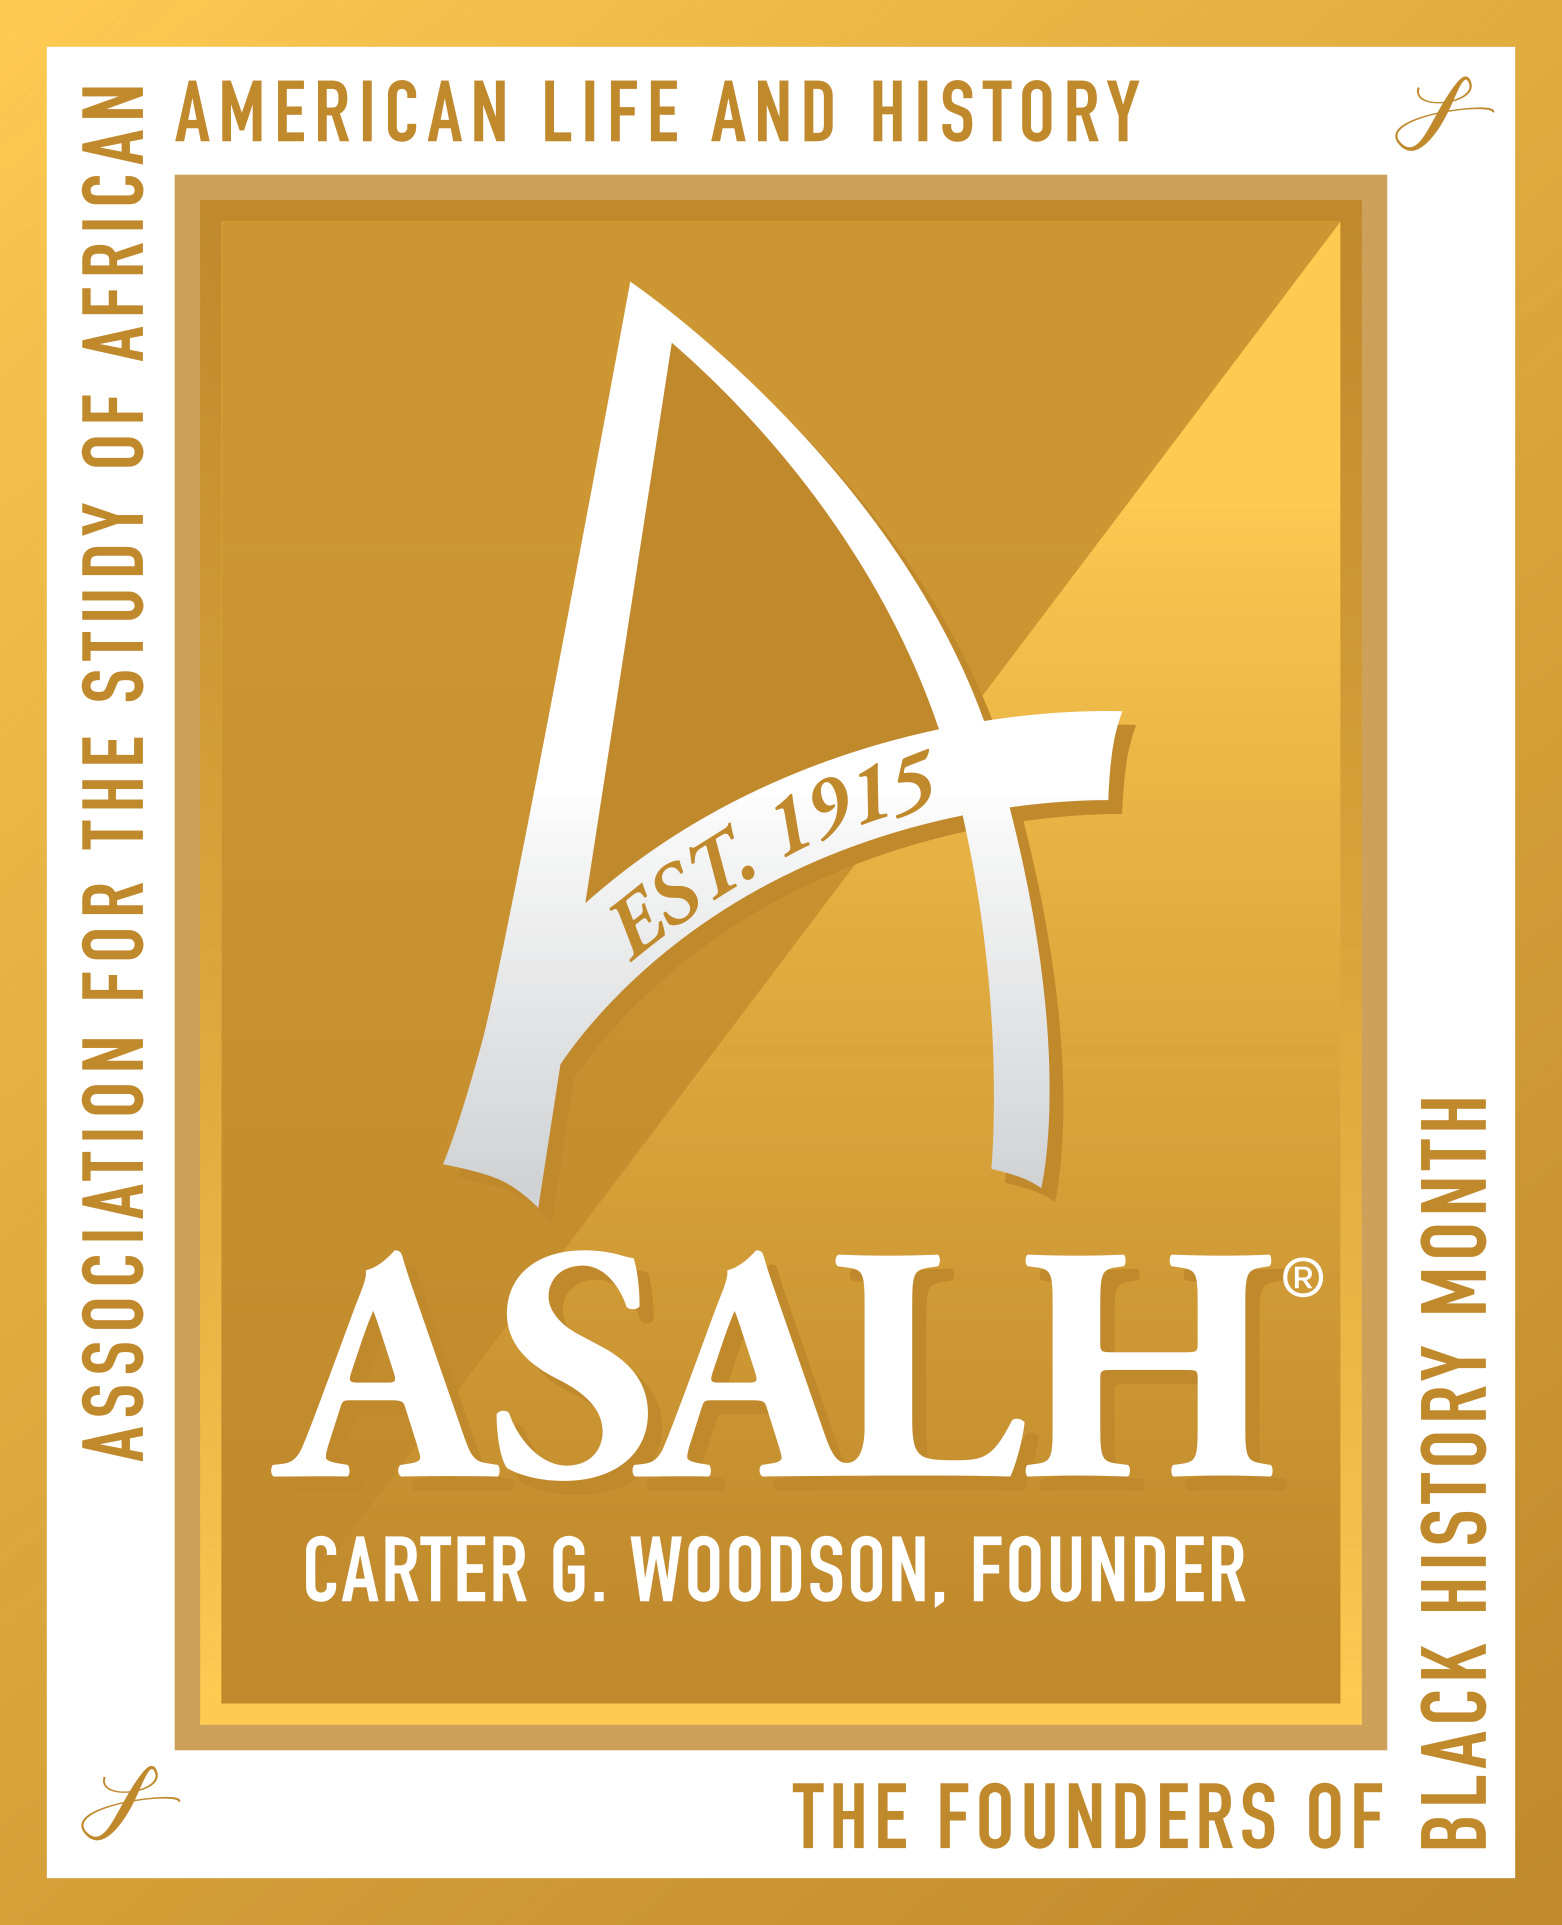 ASALH Gold Logo from https://asalh.org/brand/#logos.